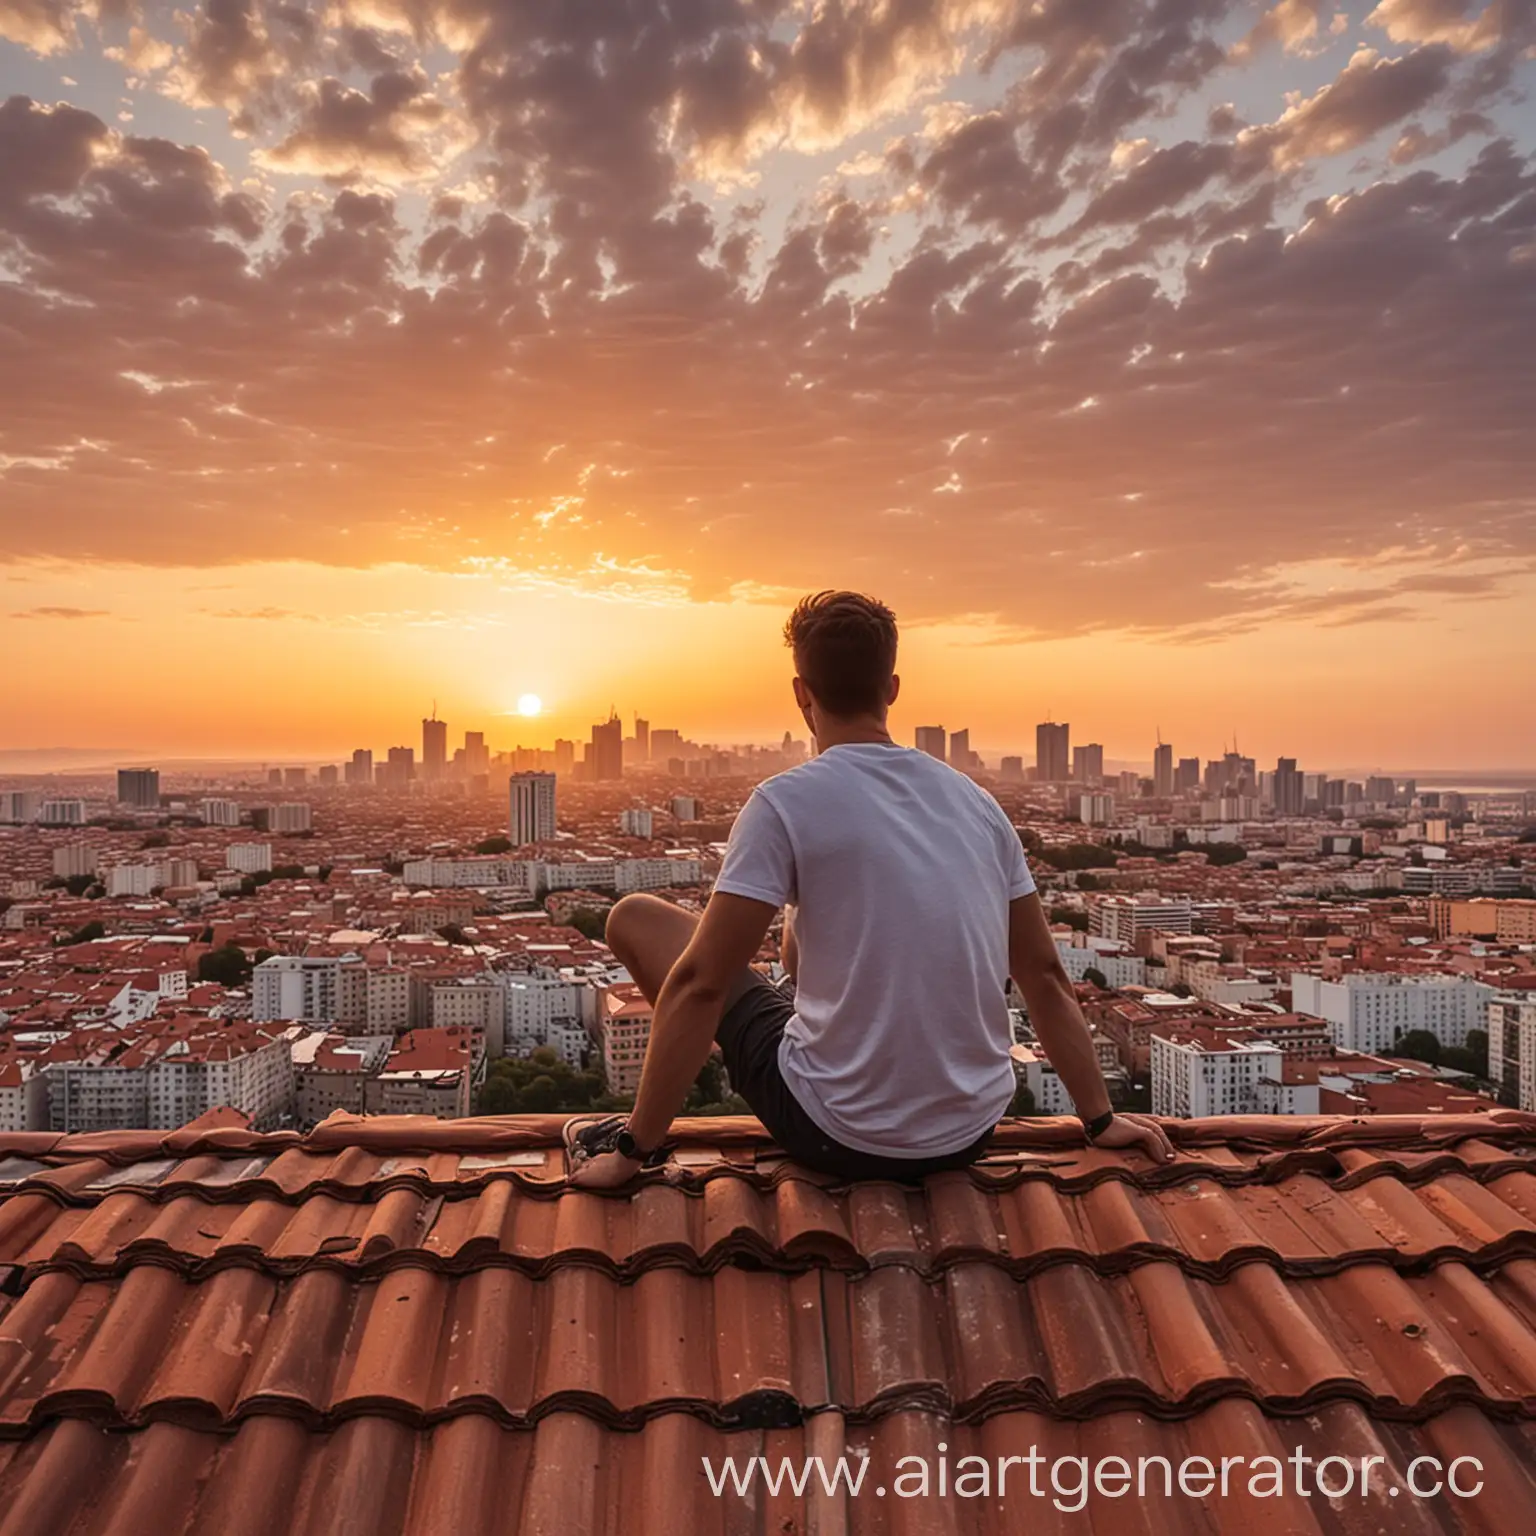 парень сидит на крыше на фоне города и заката
